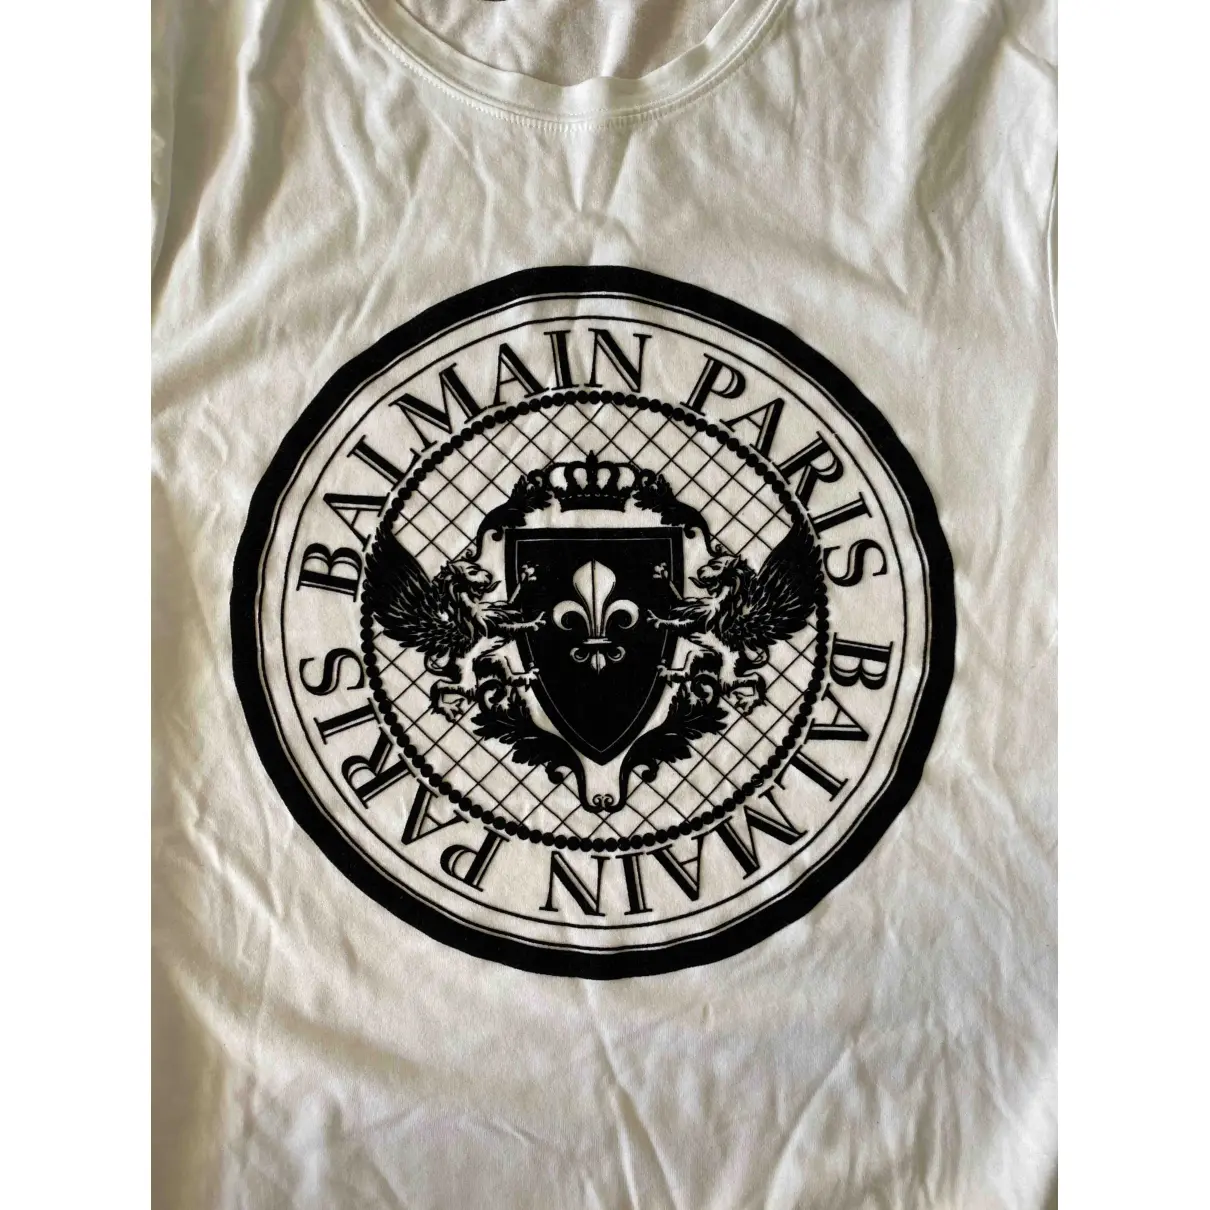 White Cotton T-shirt Balmain